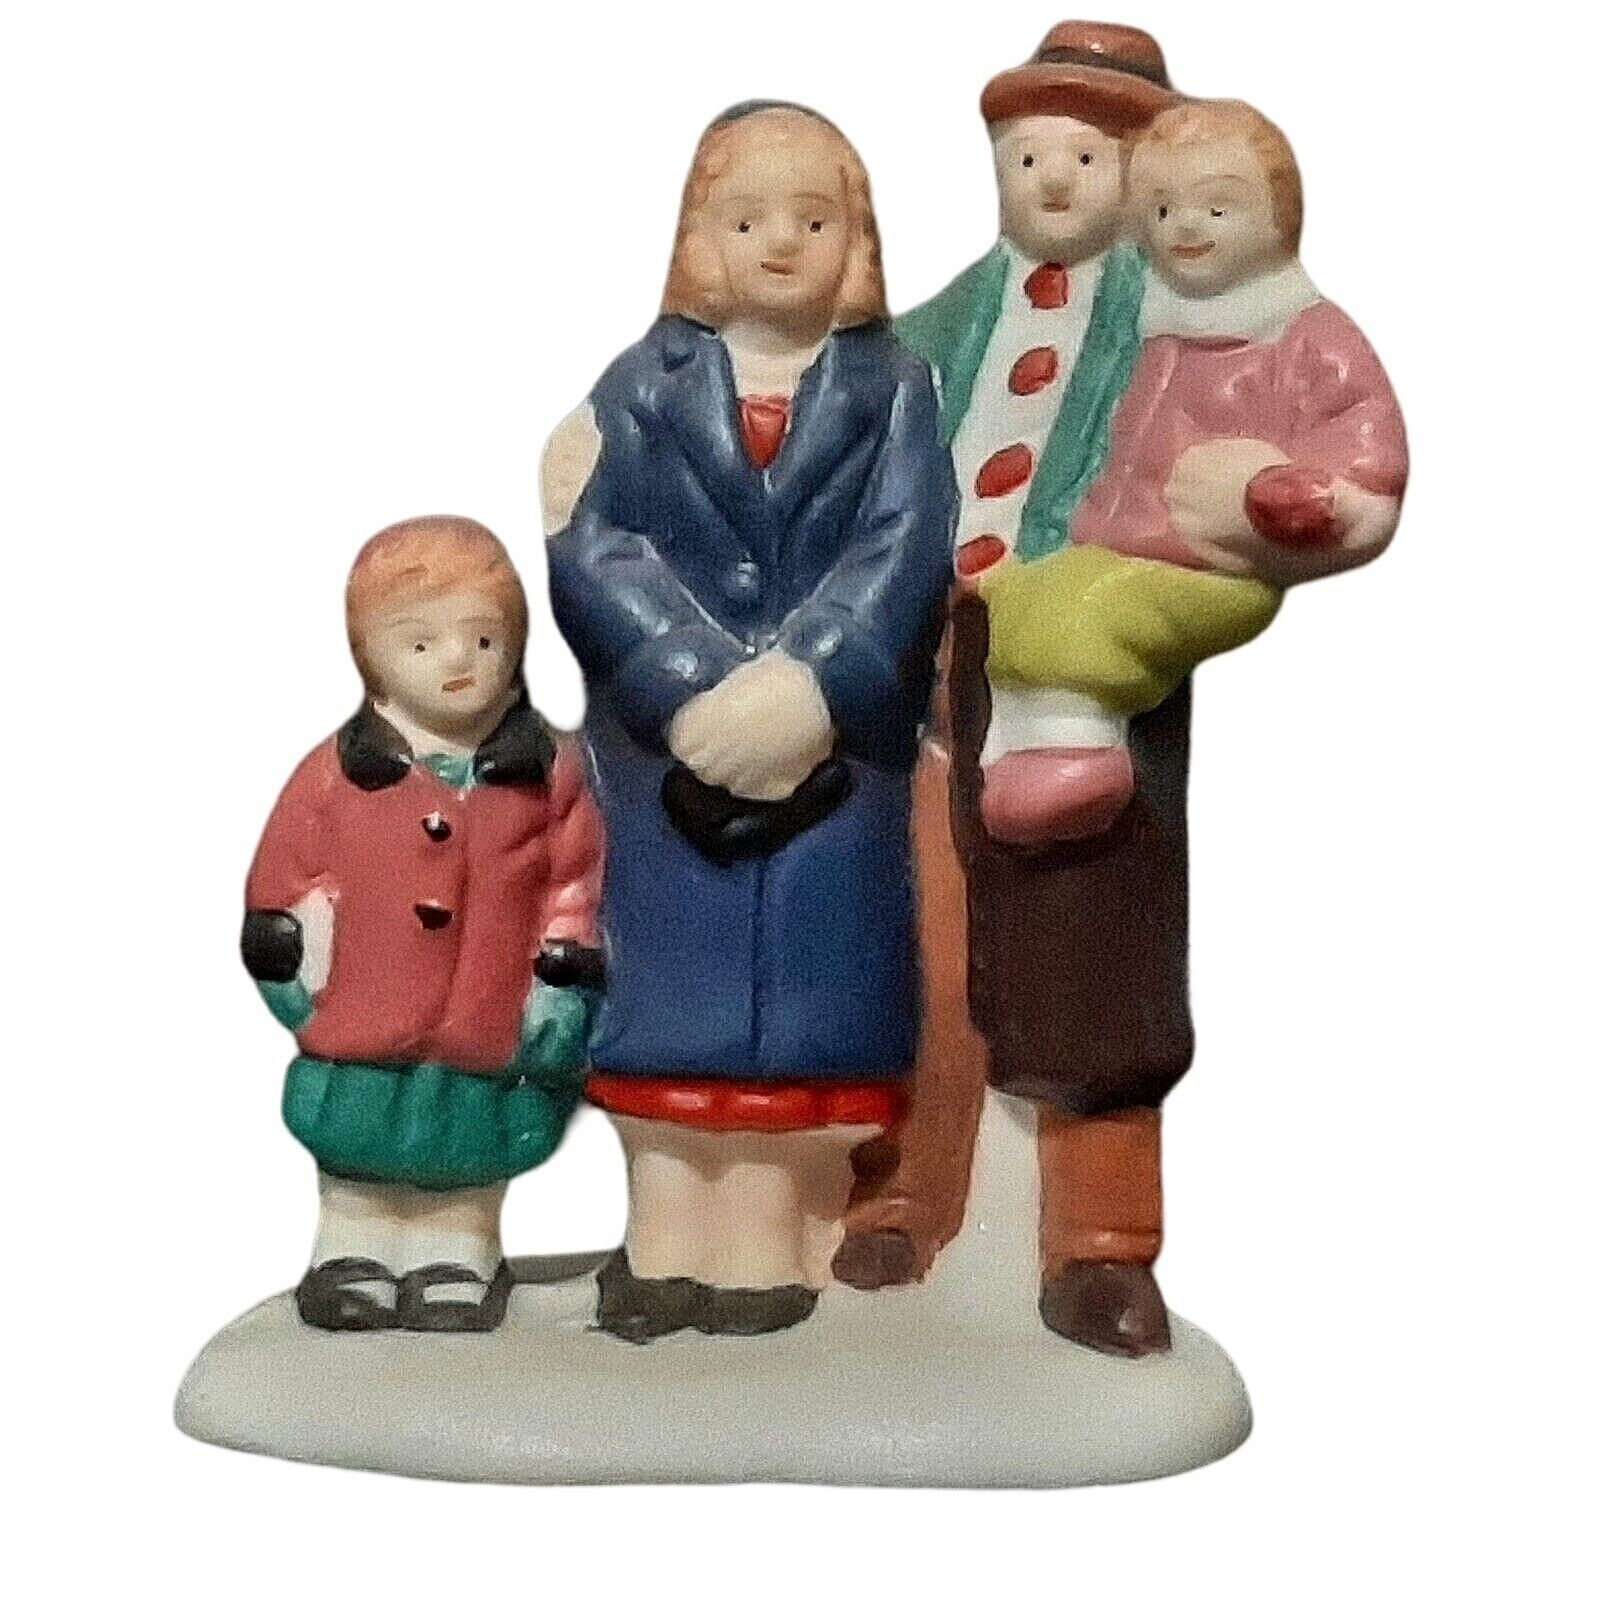 A Wonderful Holiday Life Family Christmas Porcelain Figurine